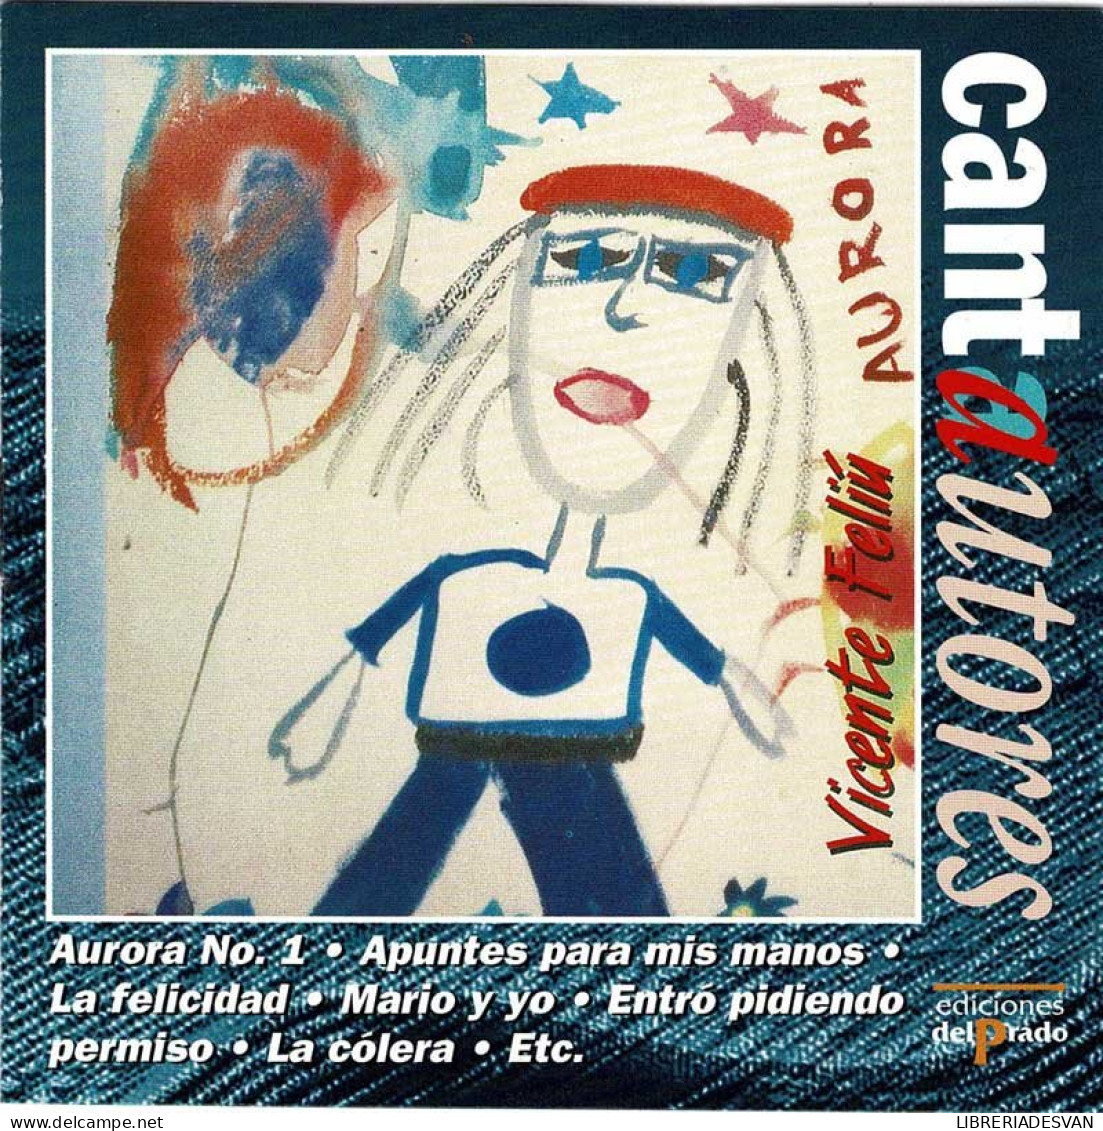 Vicente Feliú - Aurora. CD - Disco, Pop